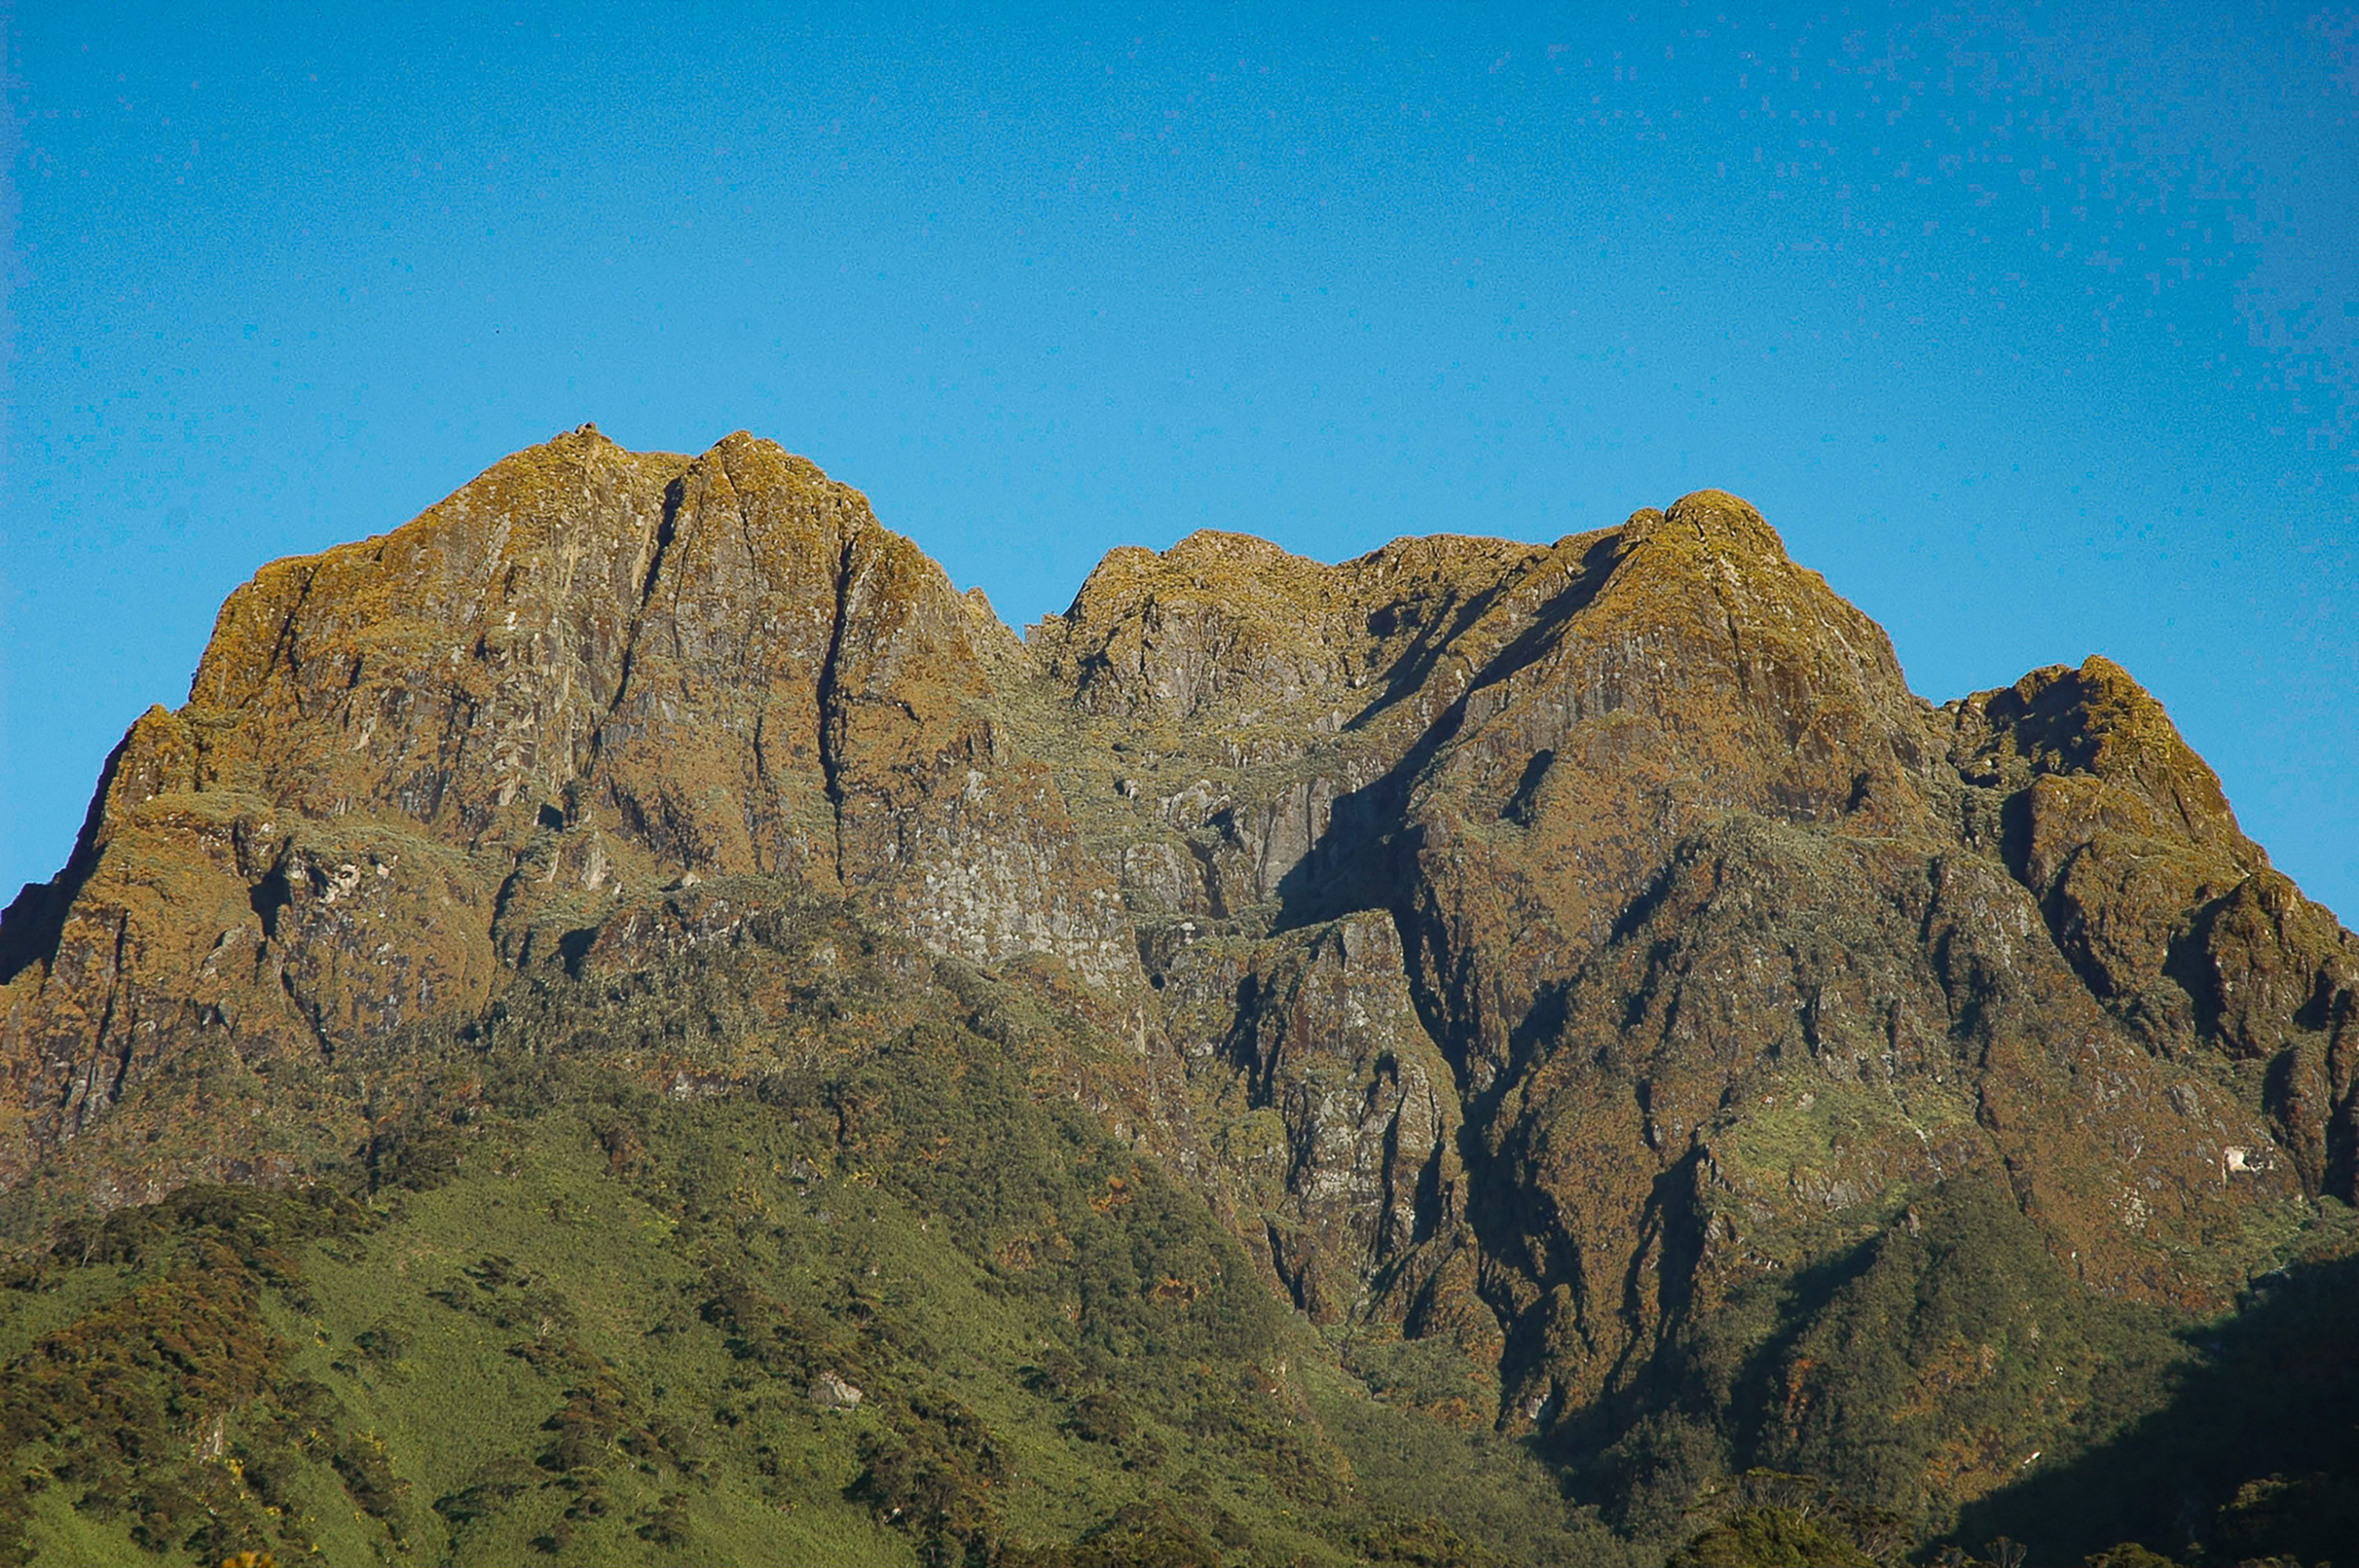 Rwenzori Mountains